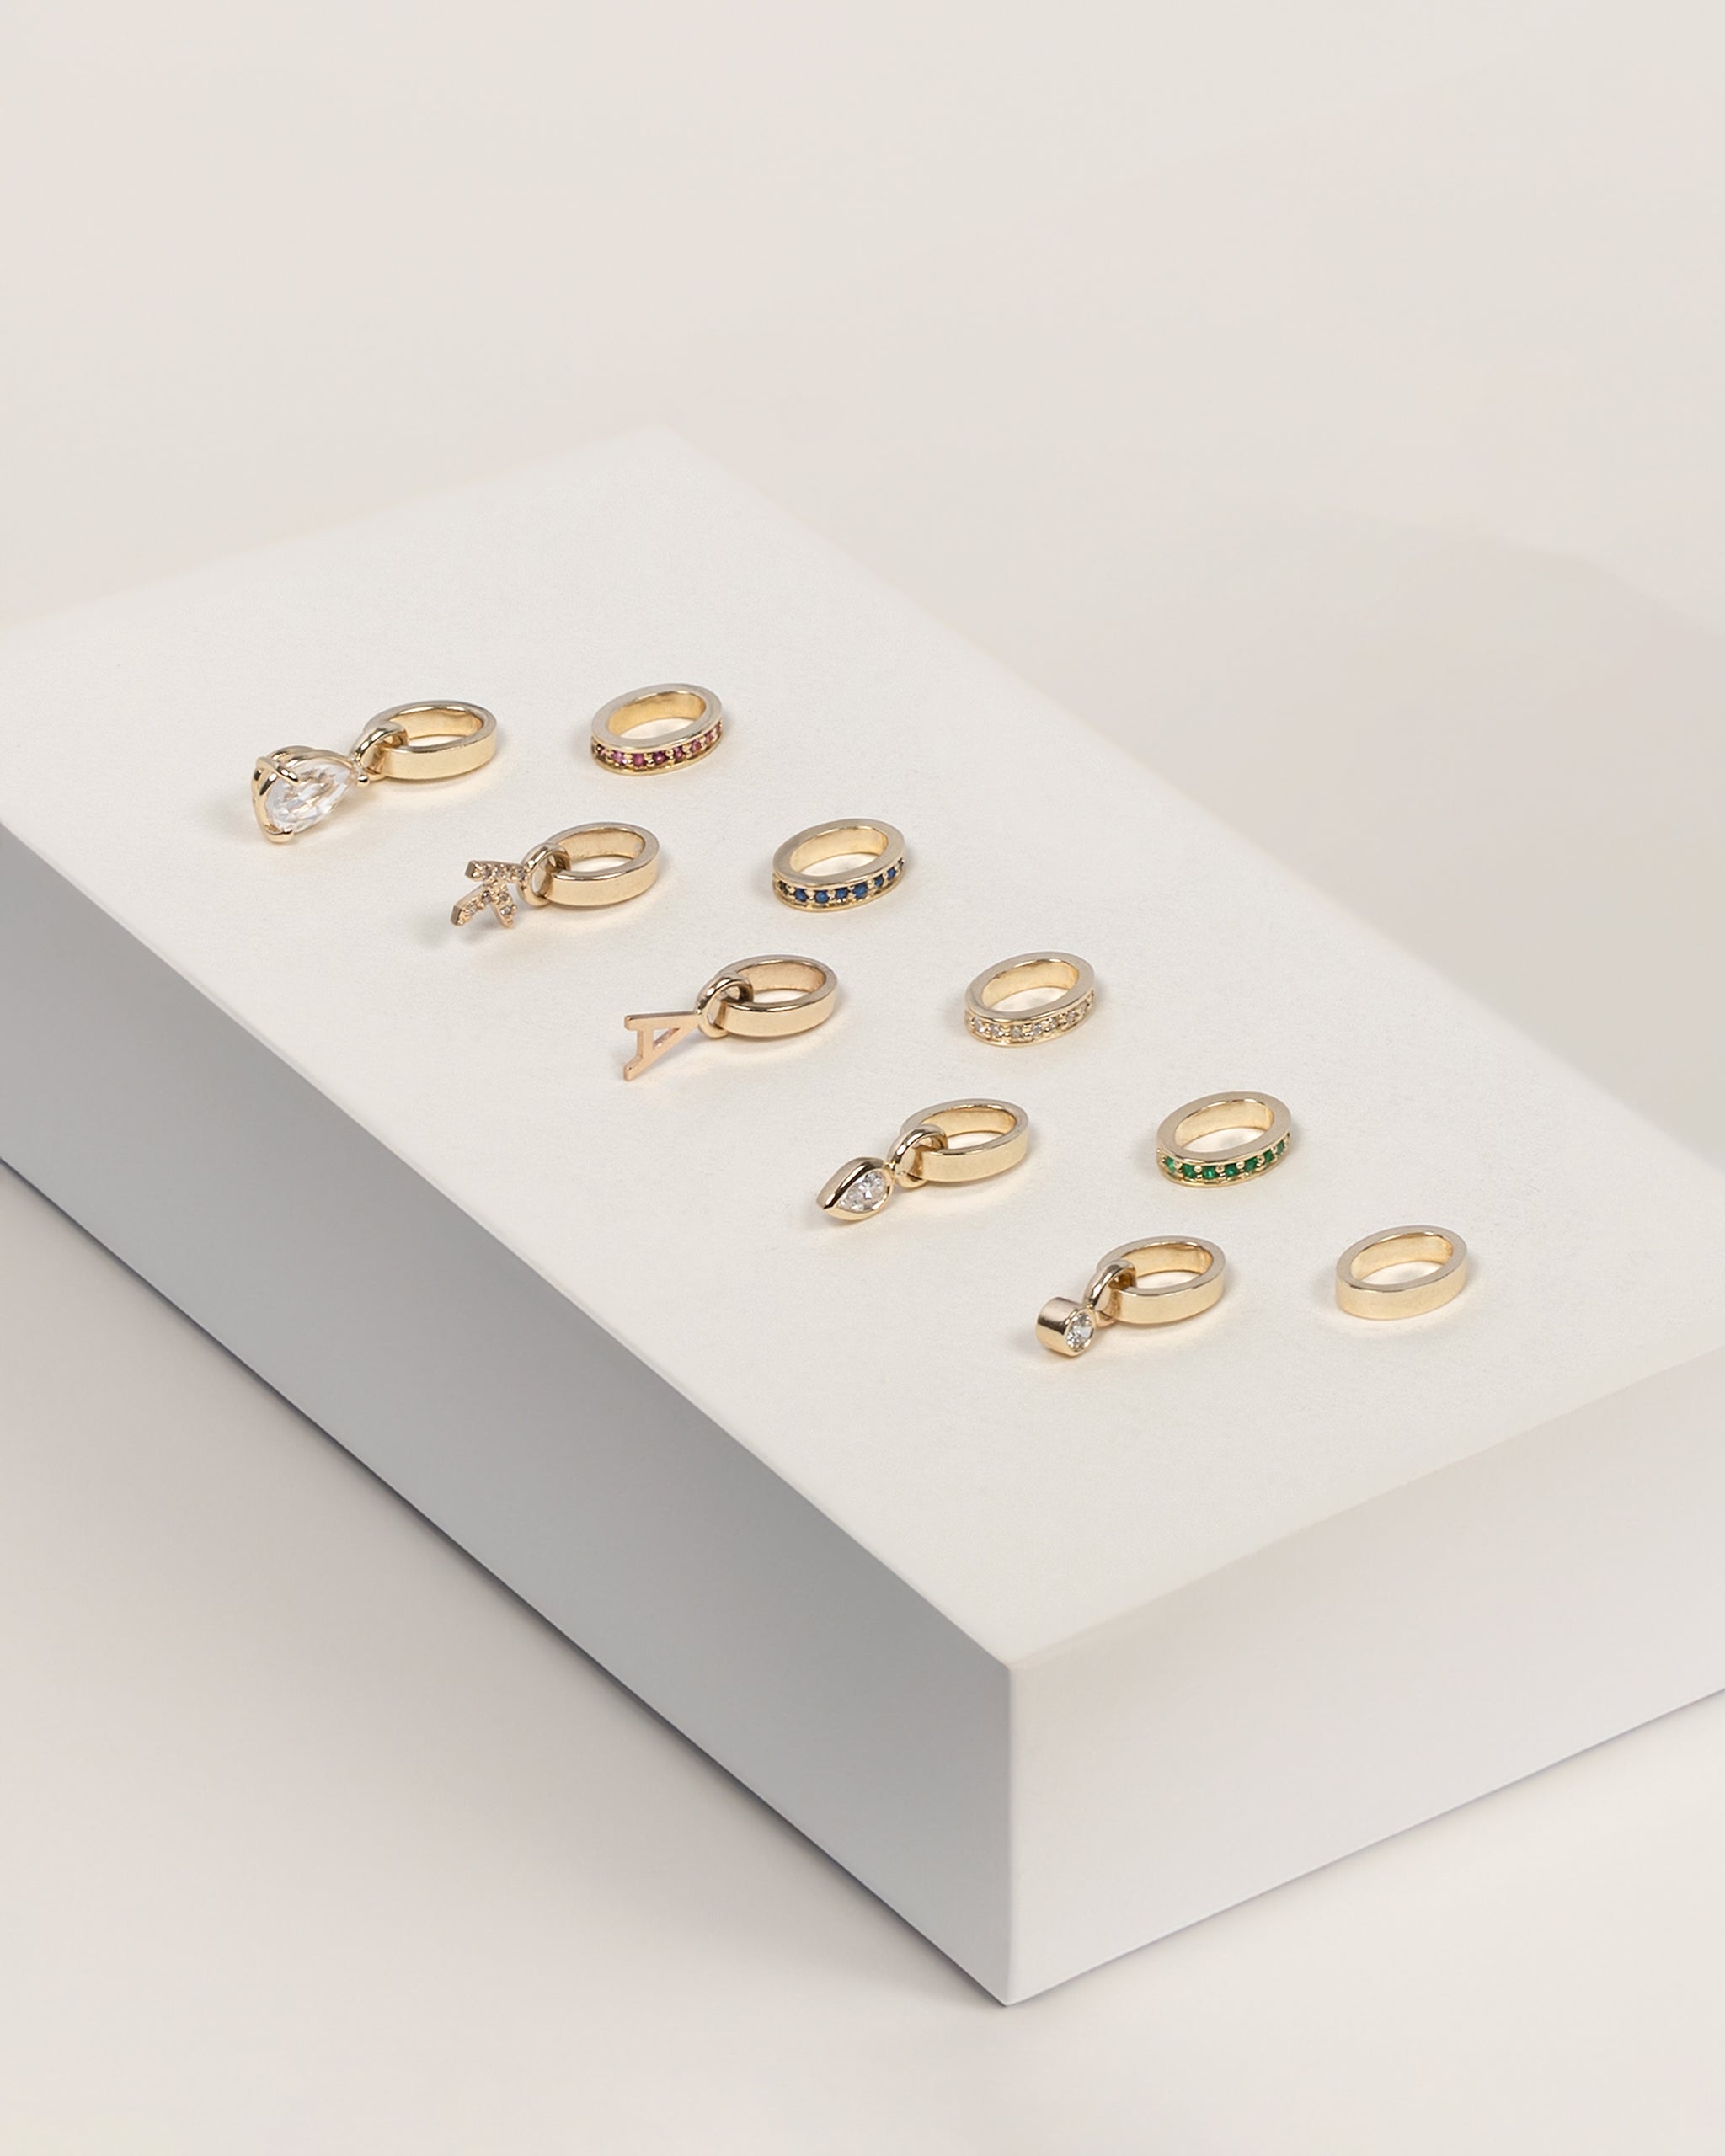 14K Gold Heirloom Charm with Initial - Zoe Lev Jewelry